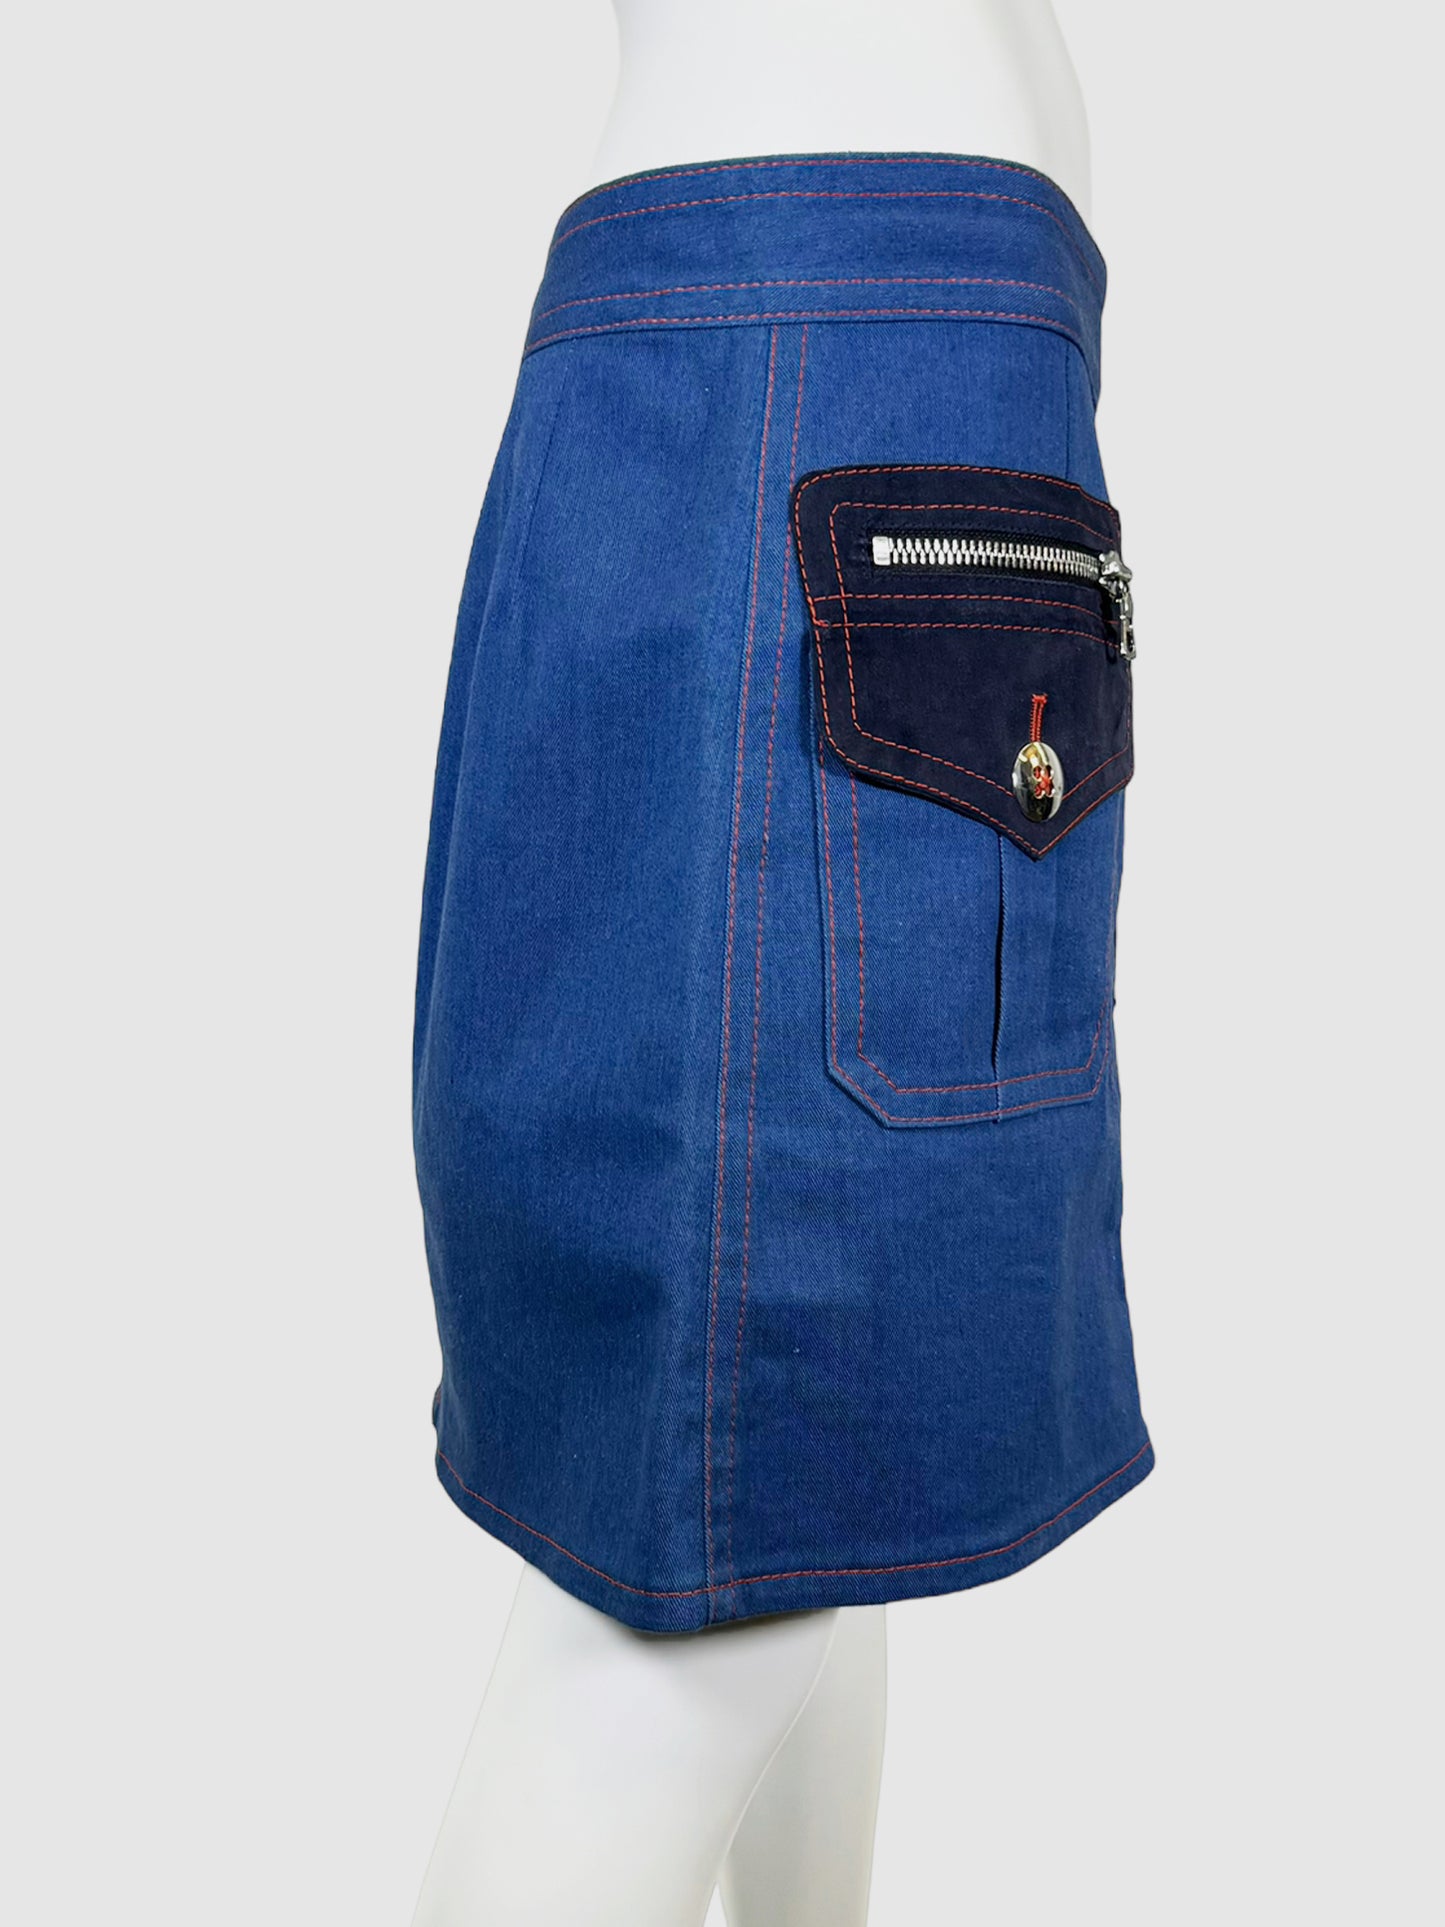 Marc Jacobs Denim Mini Skirt - Size 6